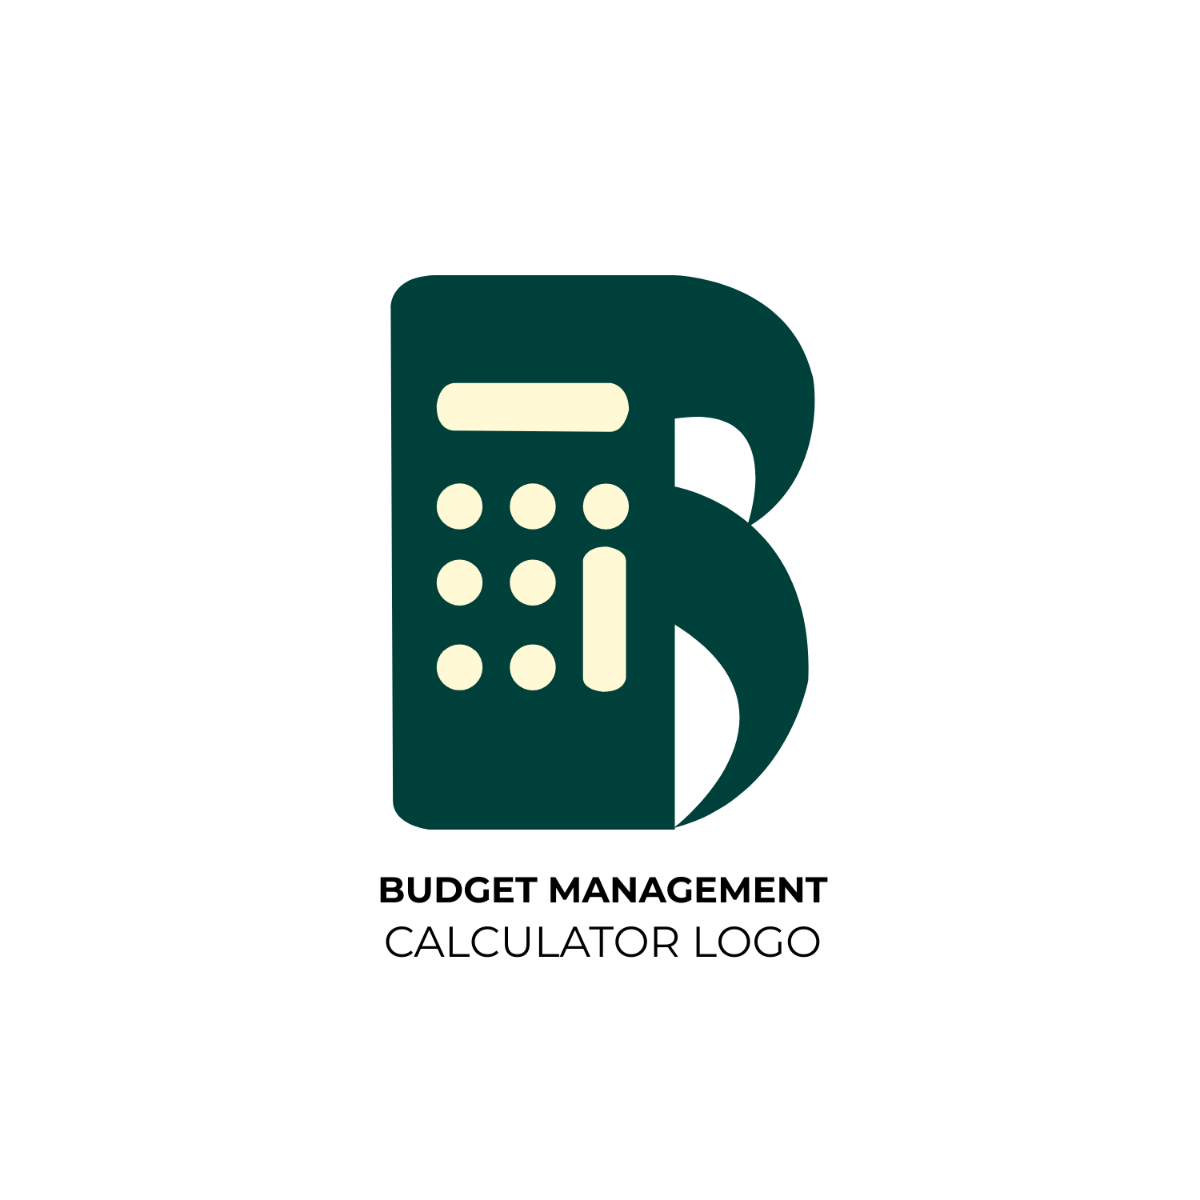 Free Budget Management Calculator Logo Template